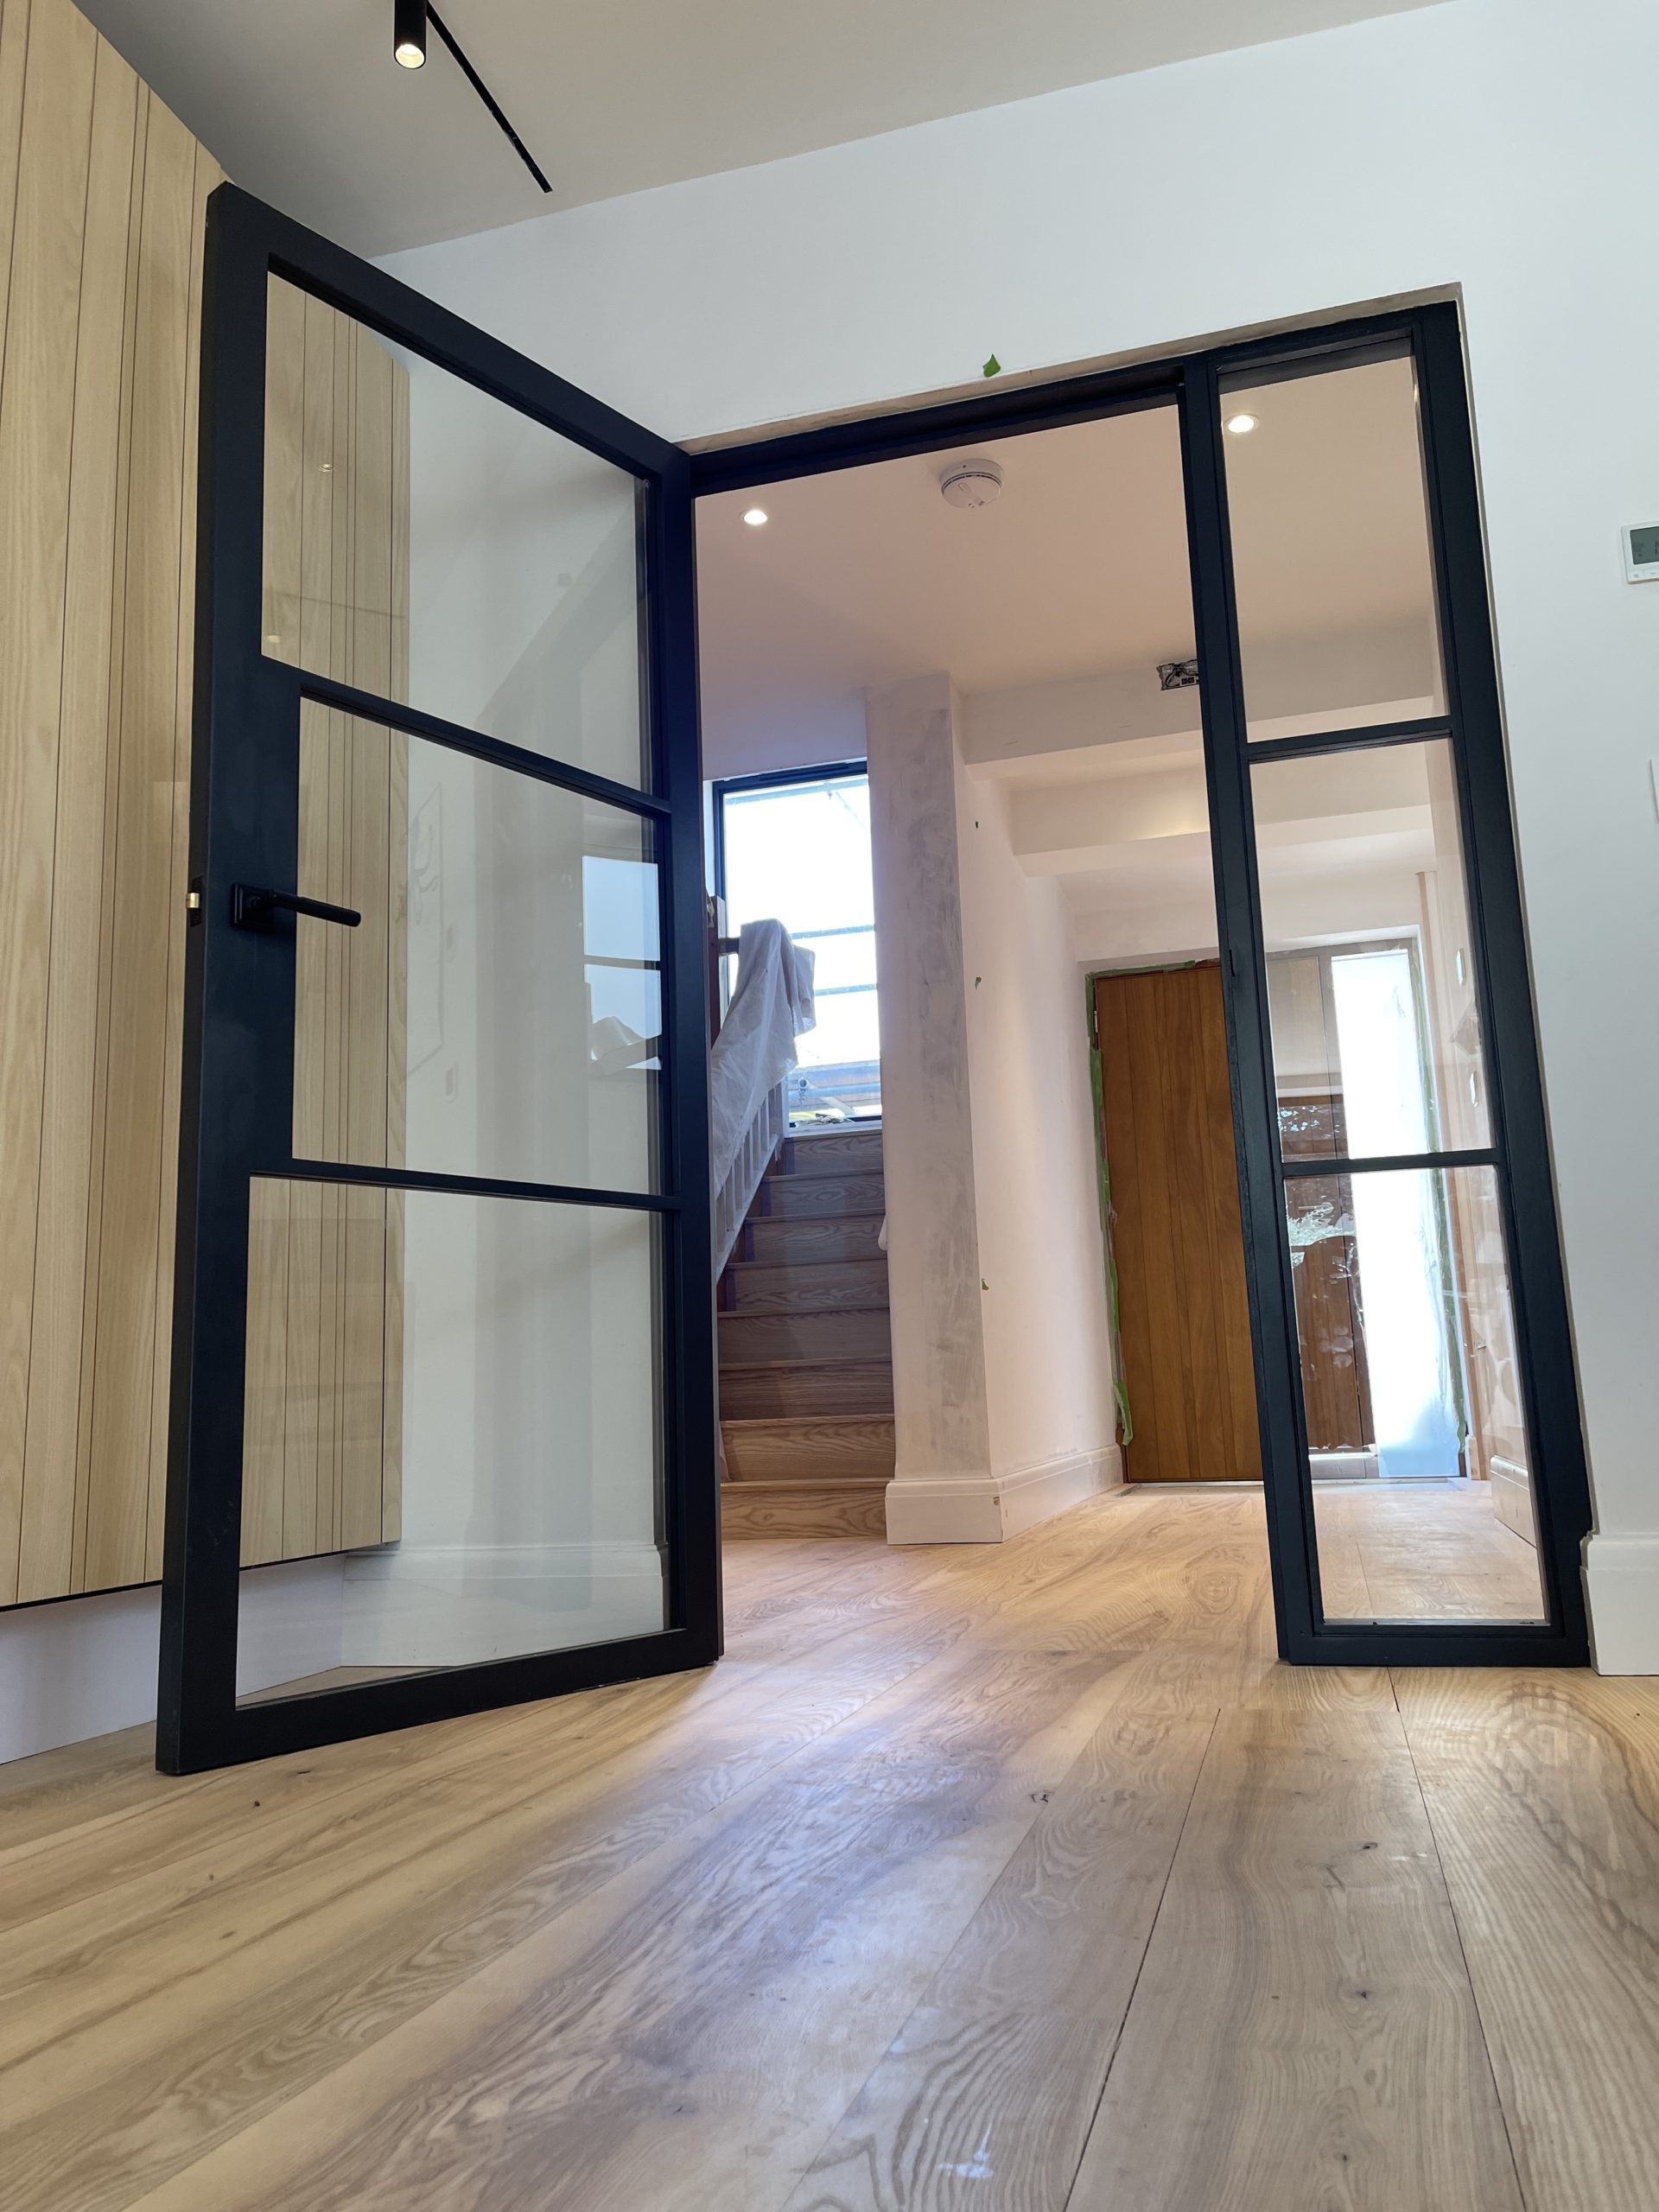 Industrial doors  an accent in modern home interior design